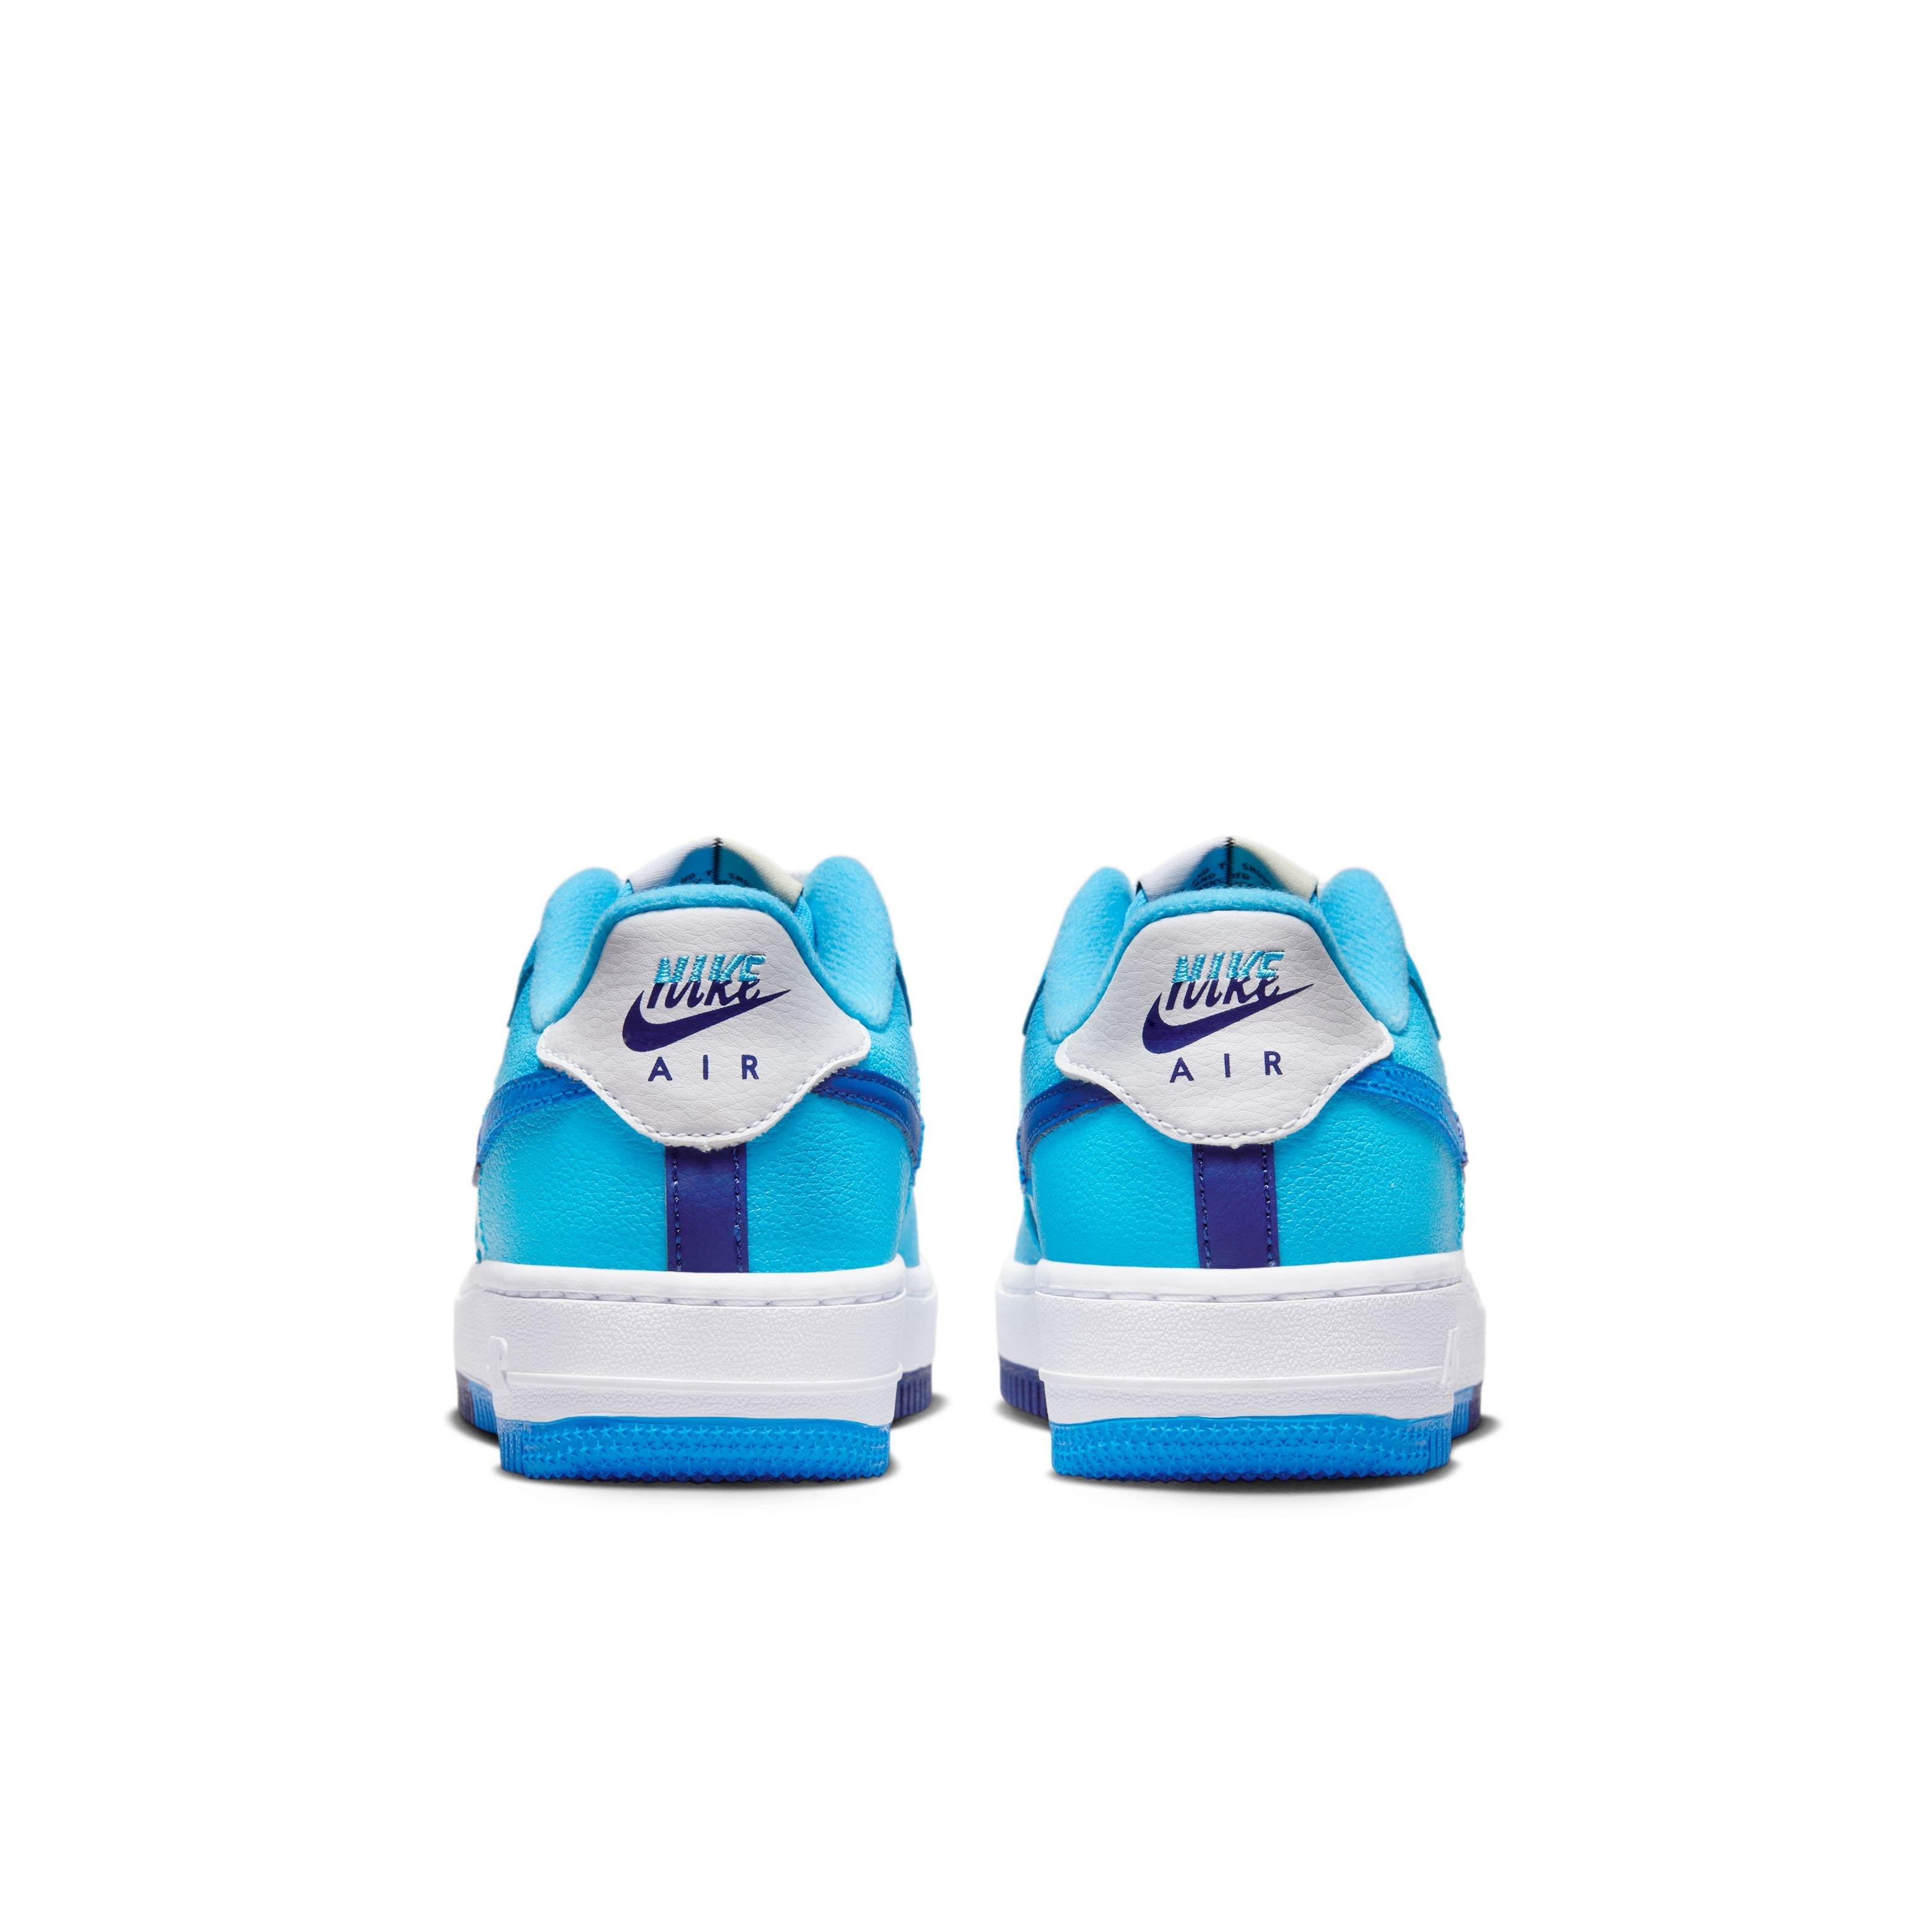 Nike Toddler Air Force 1 Lv8 Ksa - White / Blue Hero / Bright